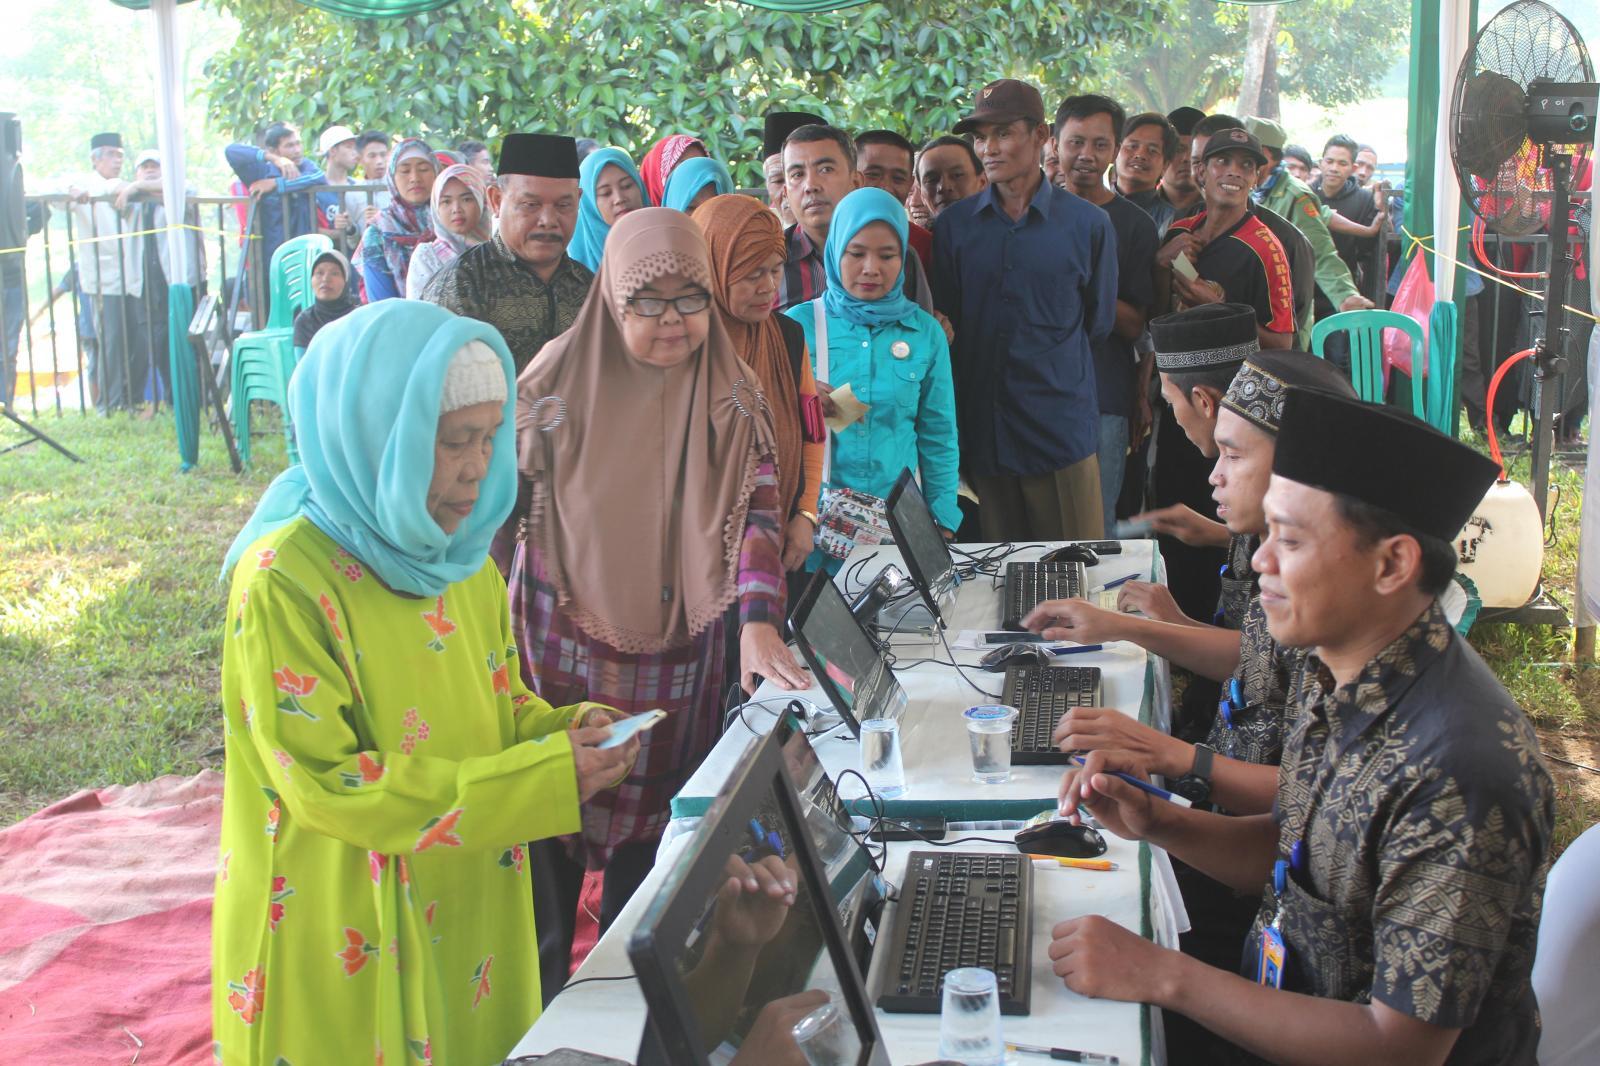 Warga Desa Babakan, Kecamatan Ciseeng, Bogor tangah melaksanakan pendaftaran untuk melakukan voting pada pemilu dengan menggunakan system e-voting pada tahun 2017 | InfoPublik (InfoPublik.id)